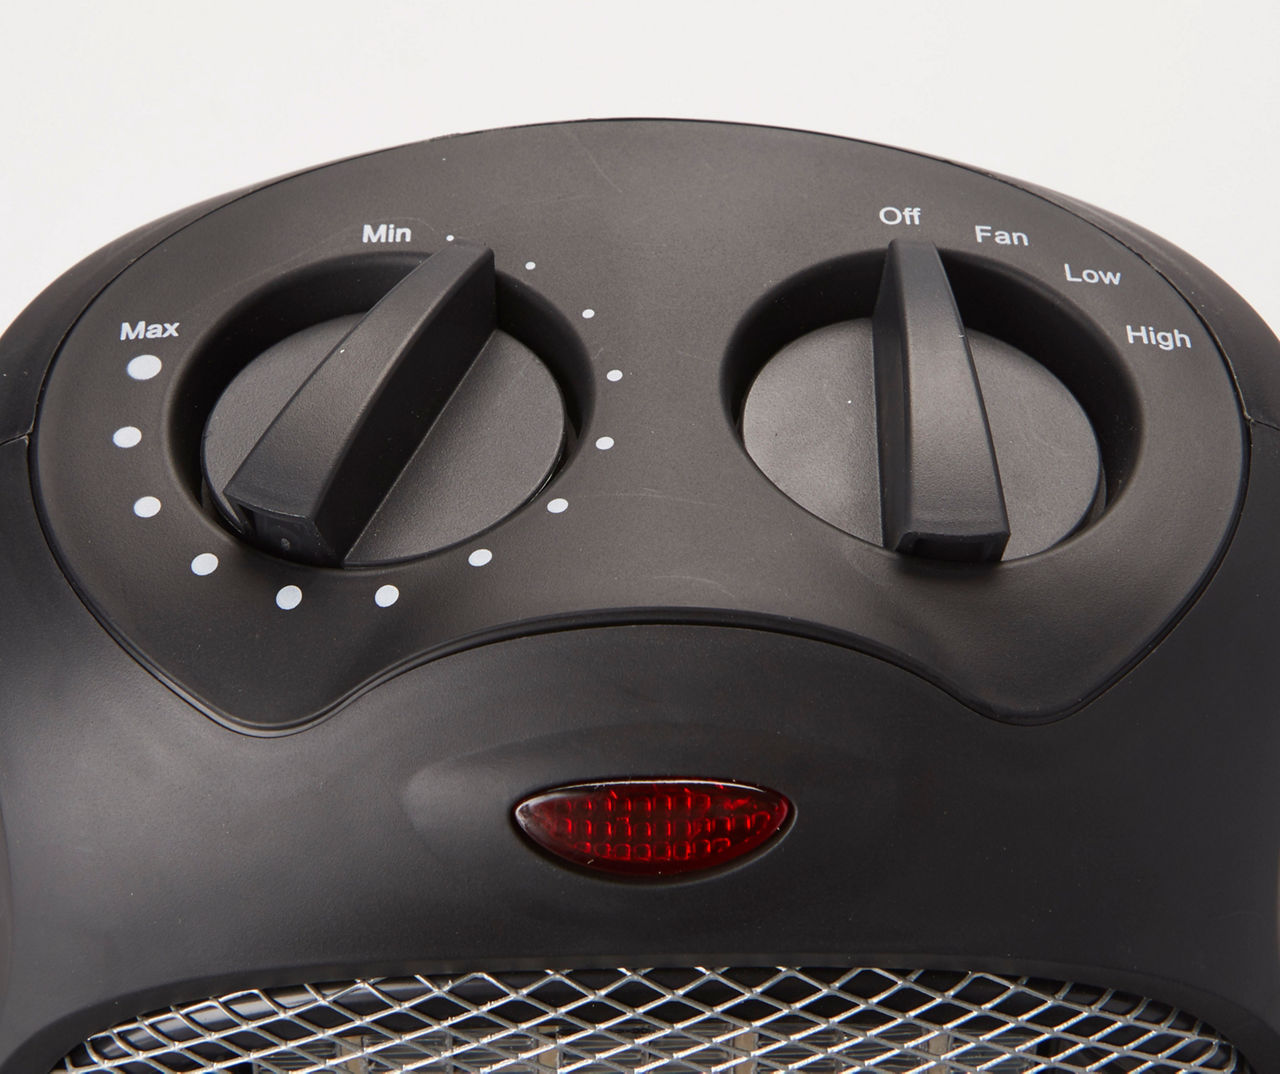 Black + Decker Black Personal Ceramic Heater